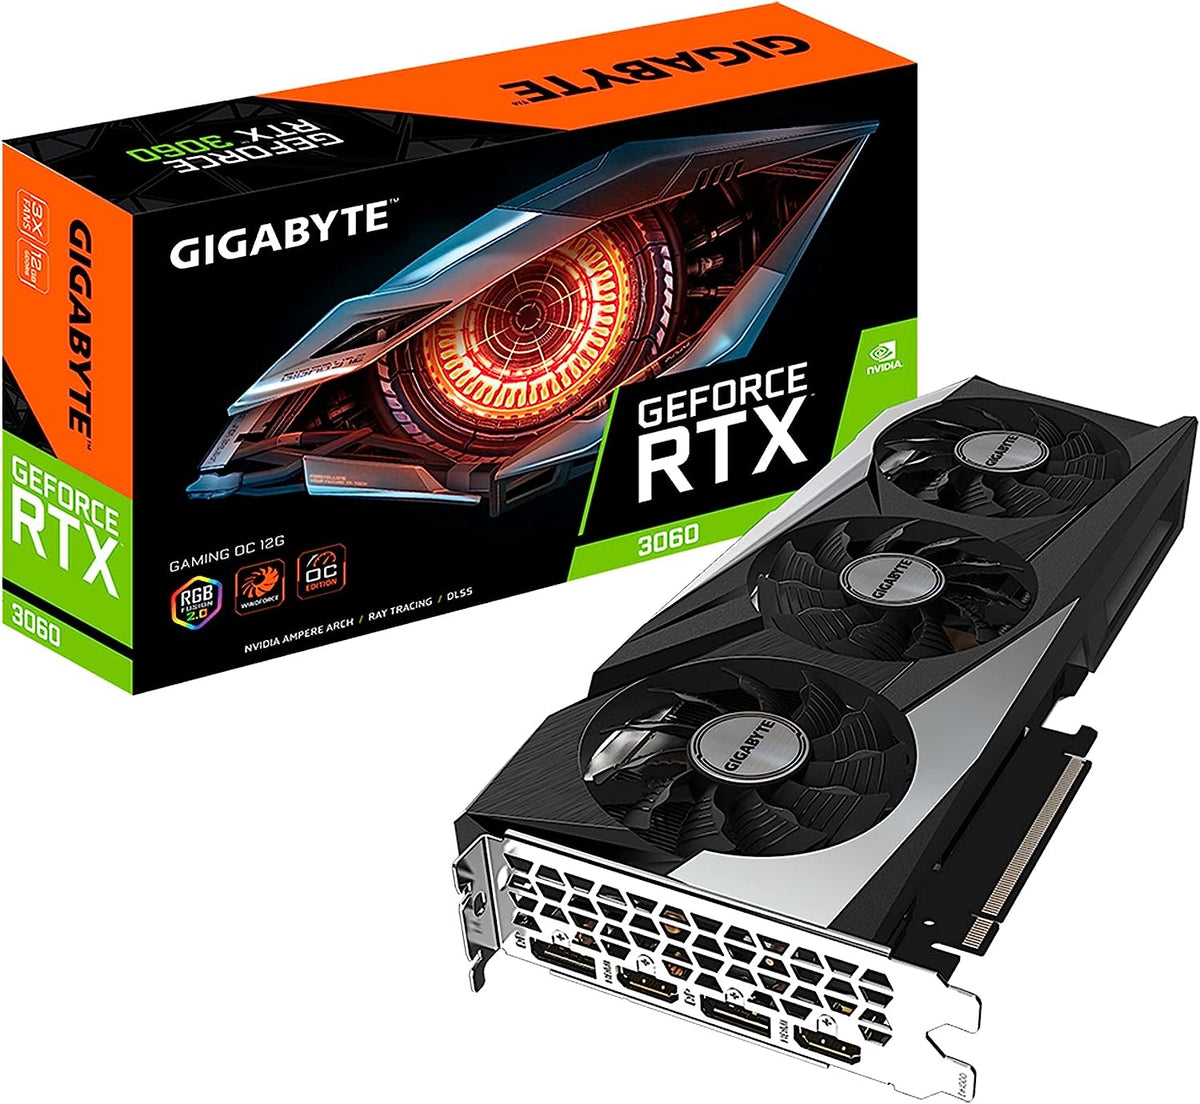 Gigabyte GeForce RTX 3060 Gaming OC 12G (REV2.0) Graphics Card